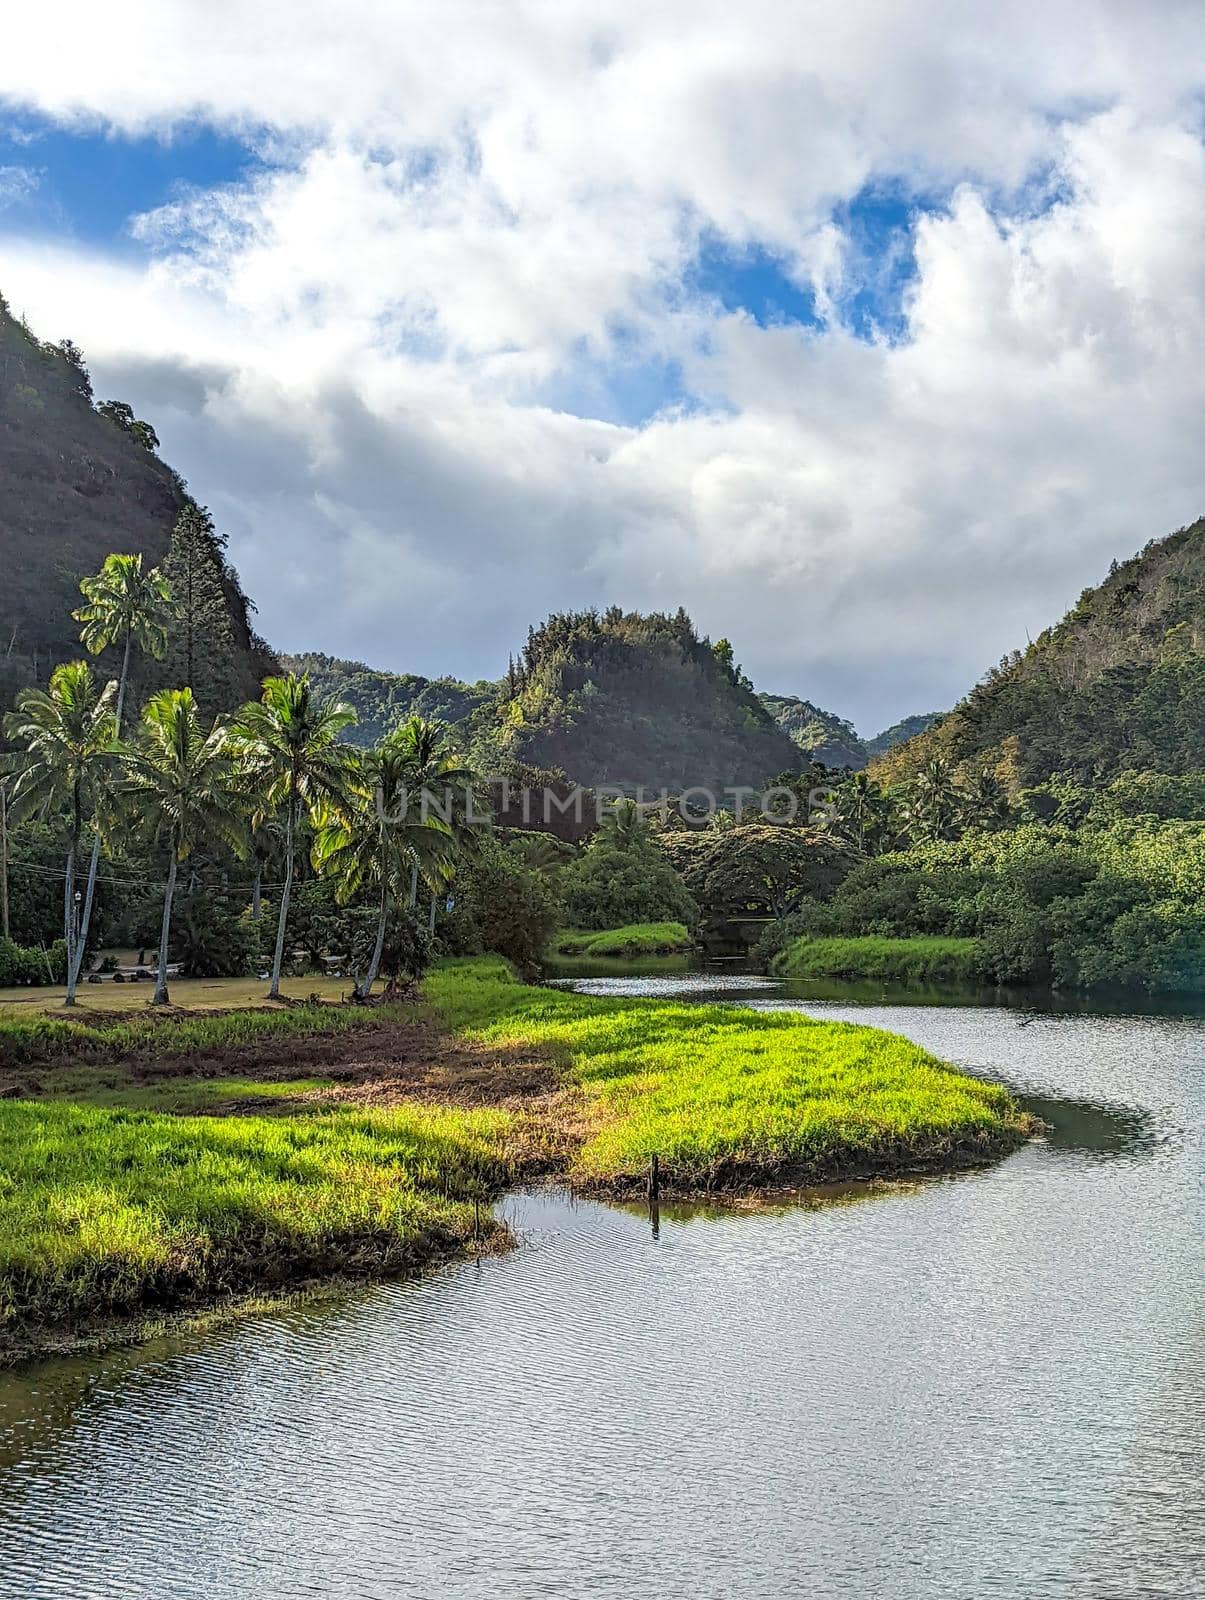 scenery at wimea botanical garden in oahu hawaii by digidreamgrafix